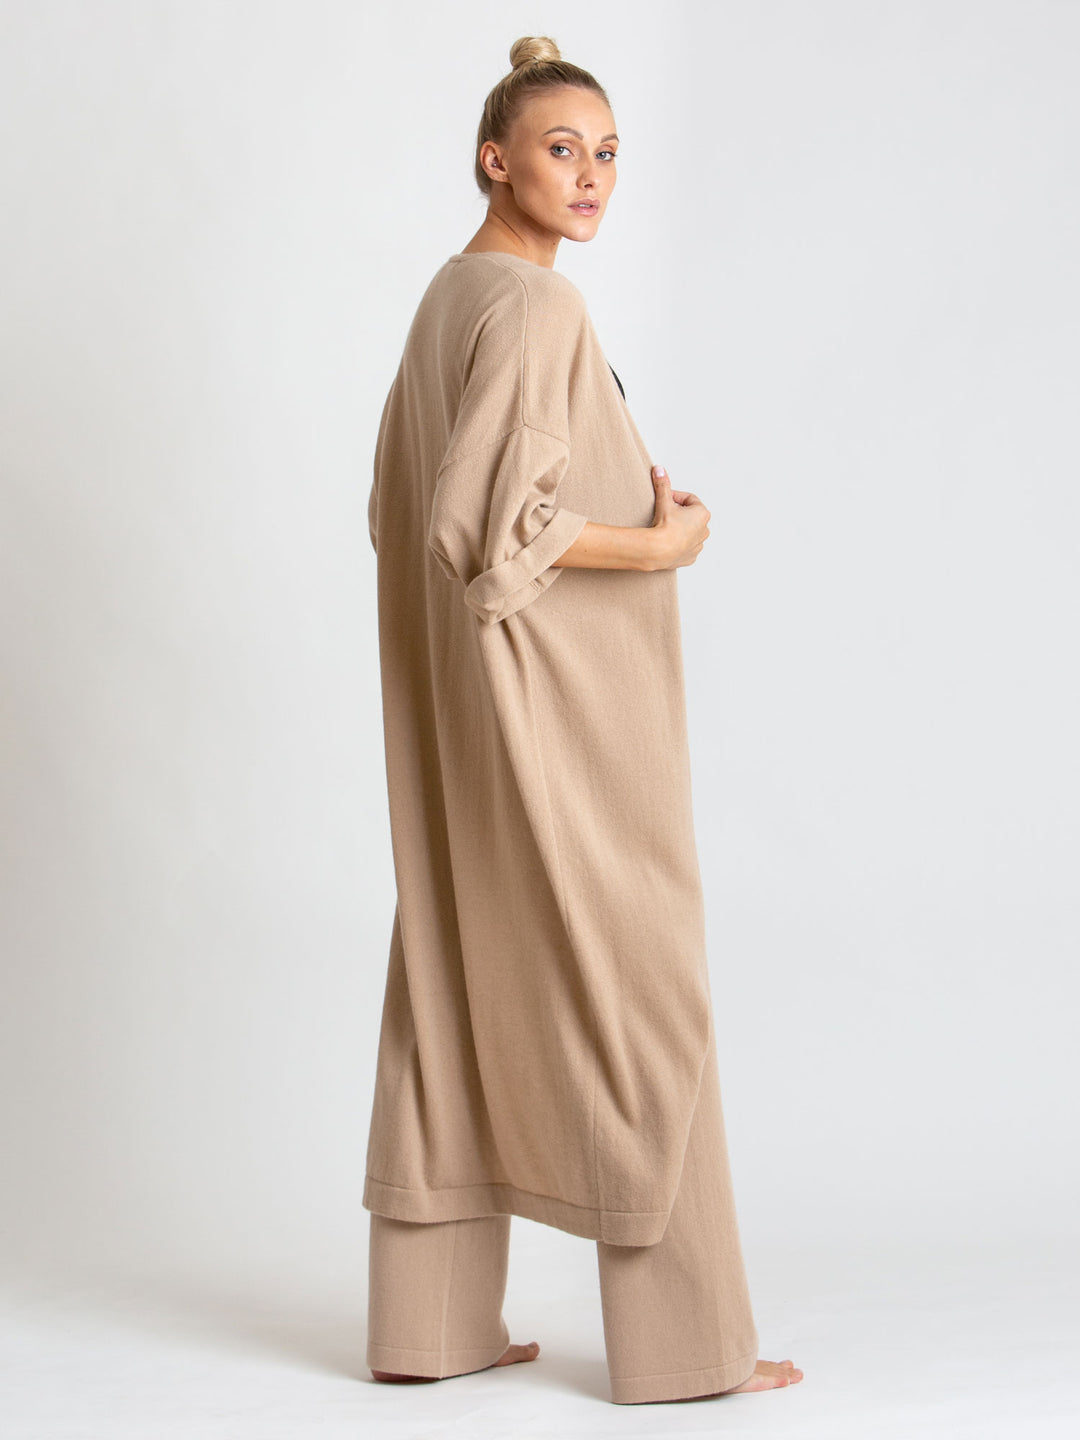 cashmere cardigan from Kashmina, 100% pure cashmere, Norwegian design, kaftan, long cardigan, sand